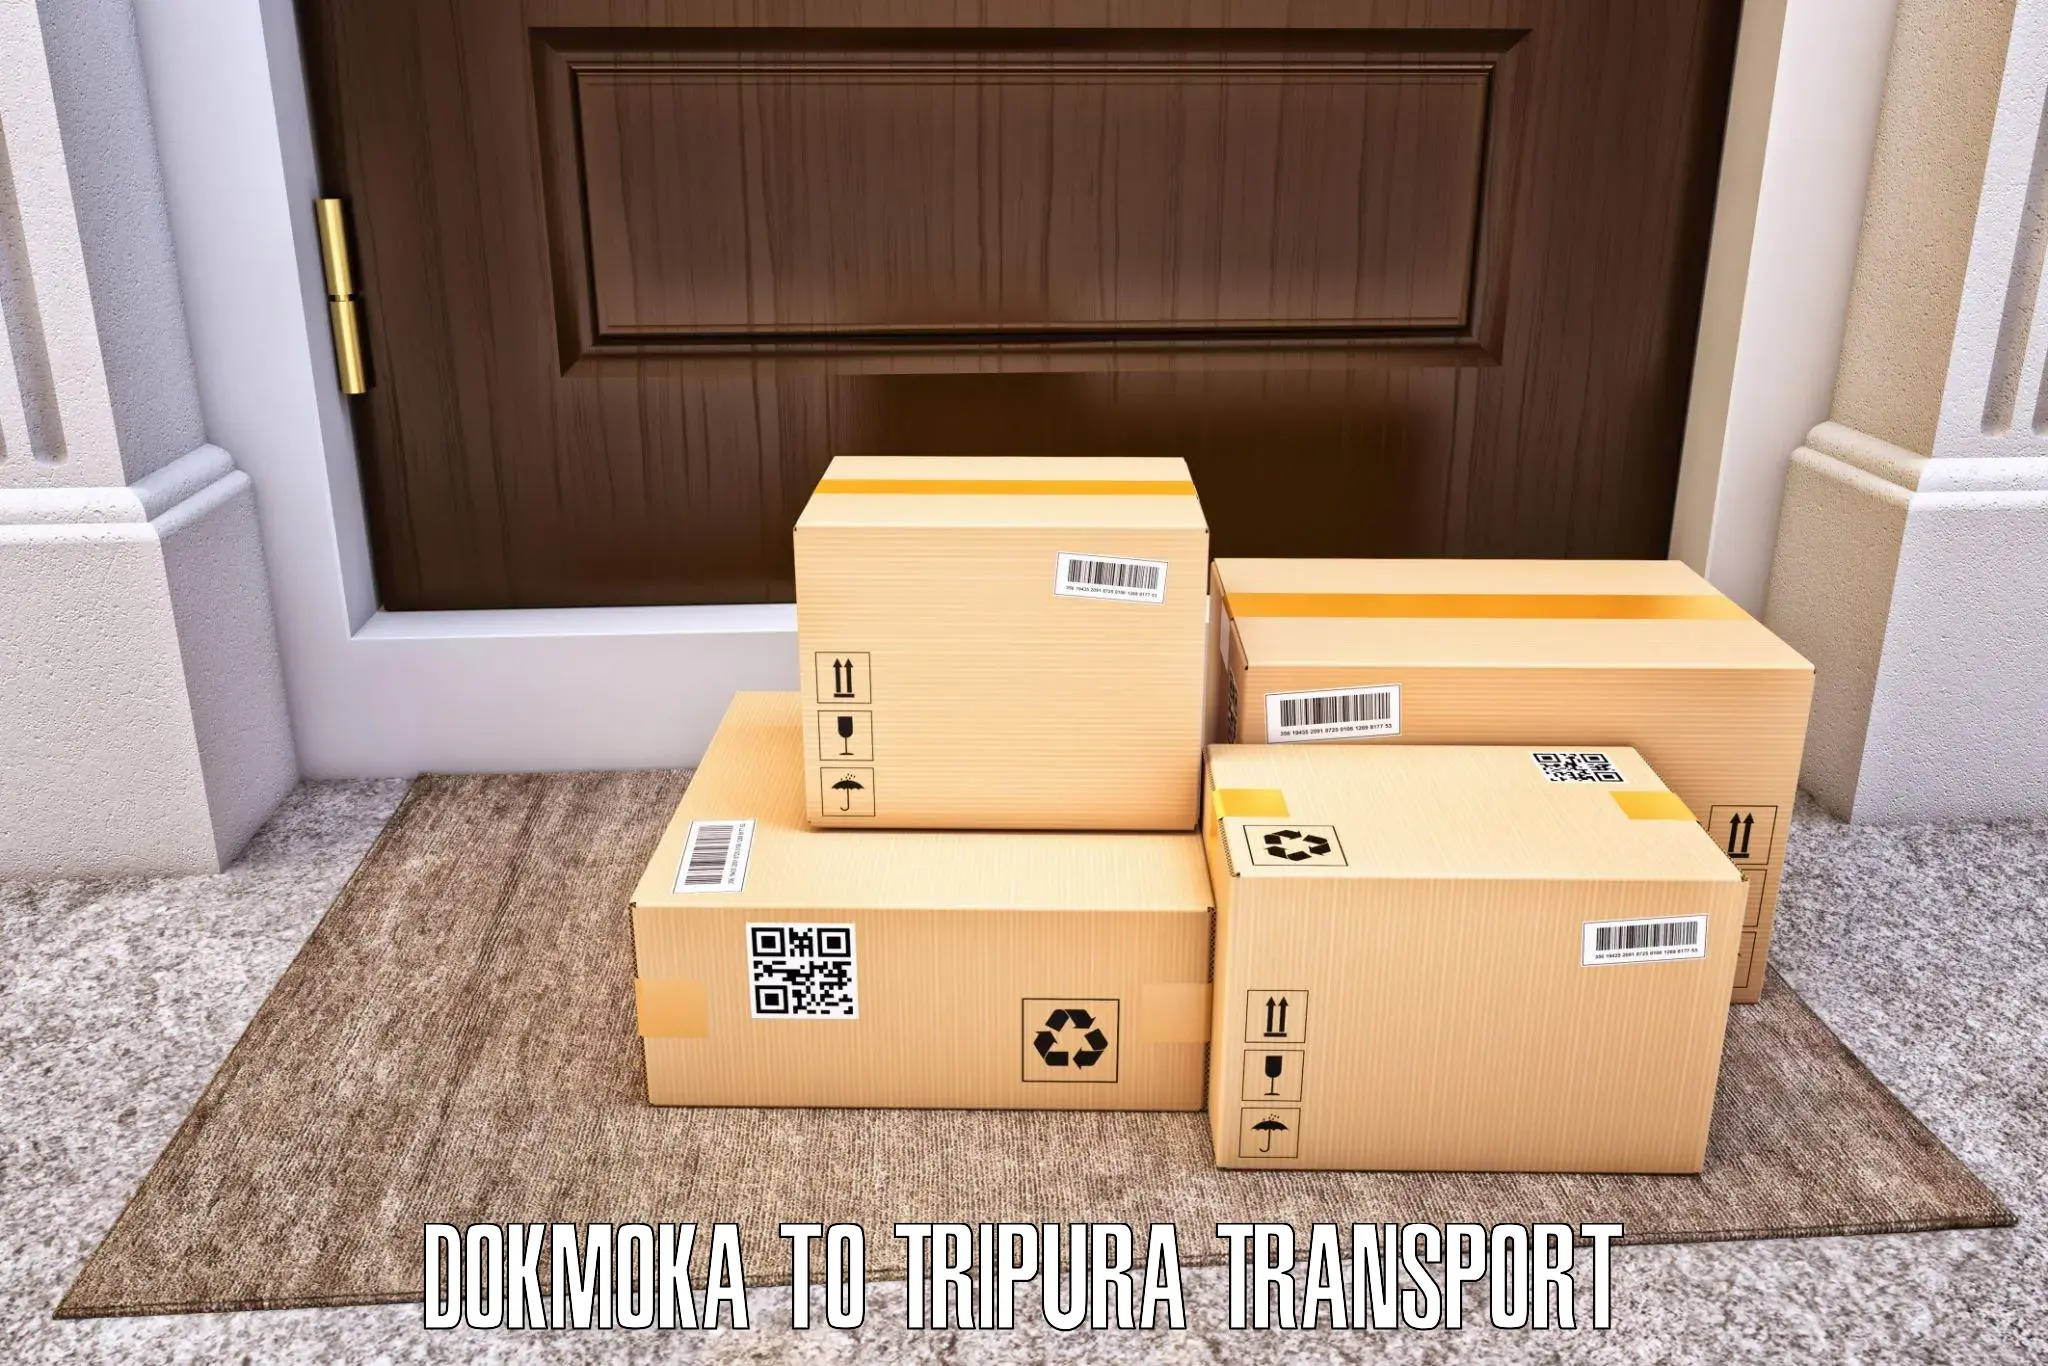 Daily transport service Dokmoka to IIIT Agartala